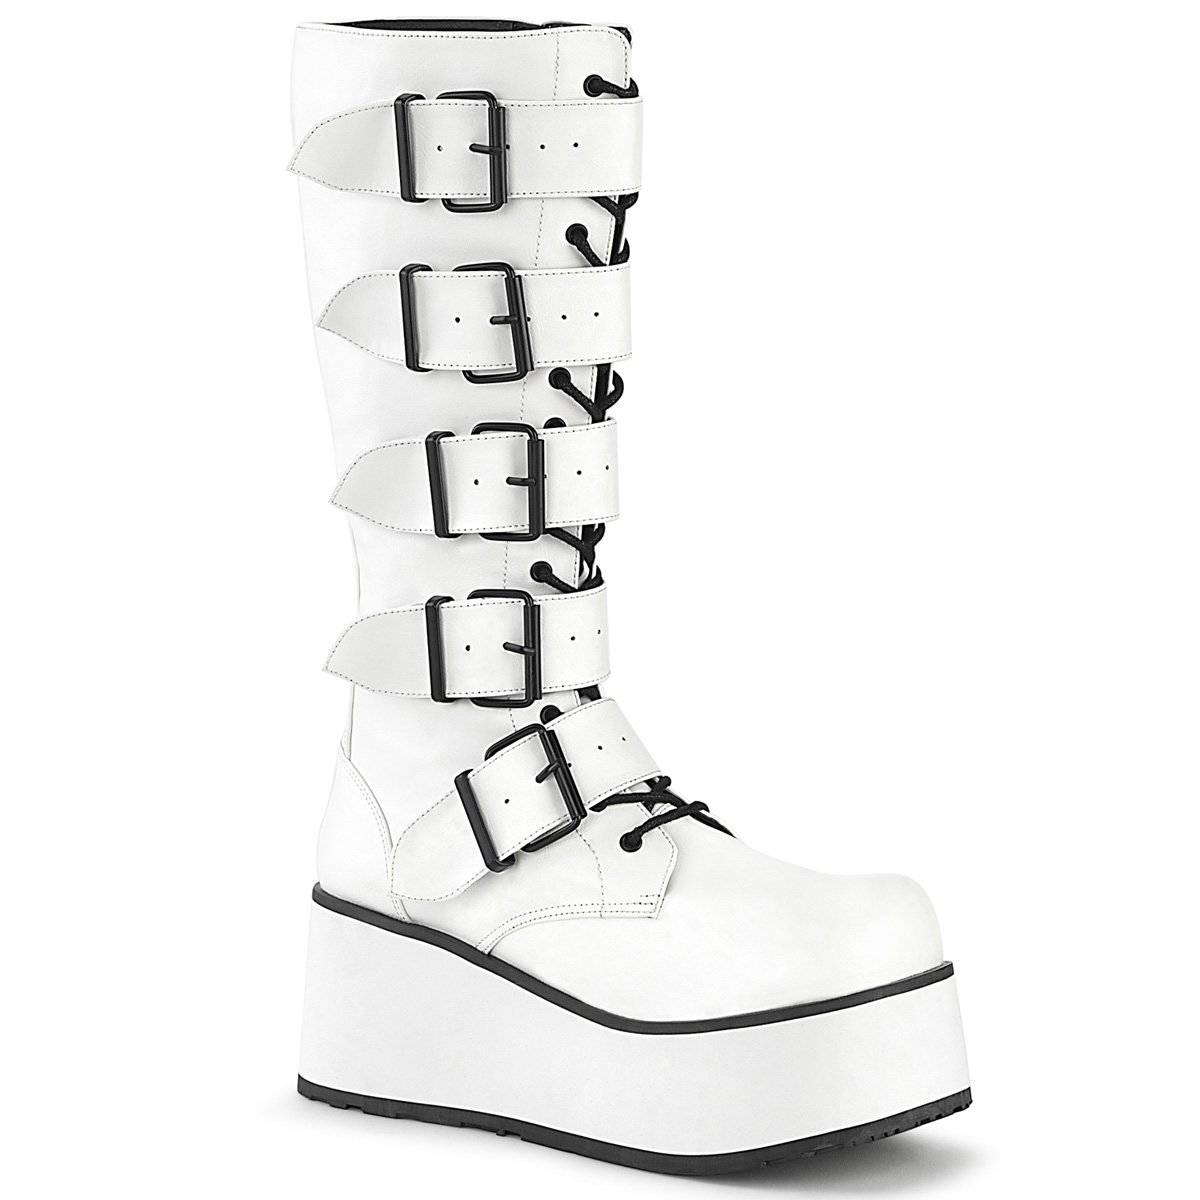 Demonia Men's Trashville-518 Knee High Platform Boots - White Vegan Leather D2967-13US Clearance